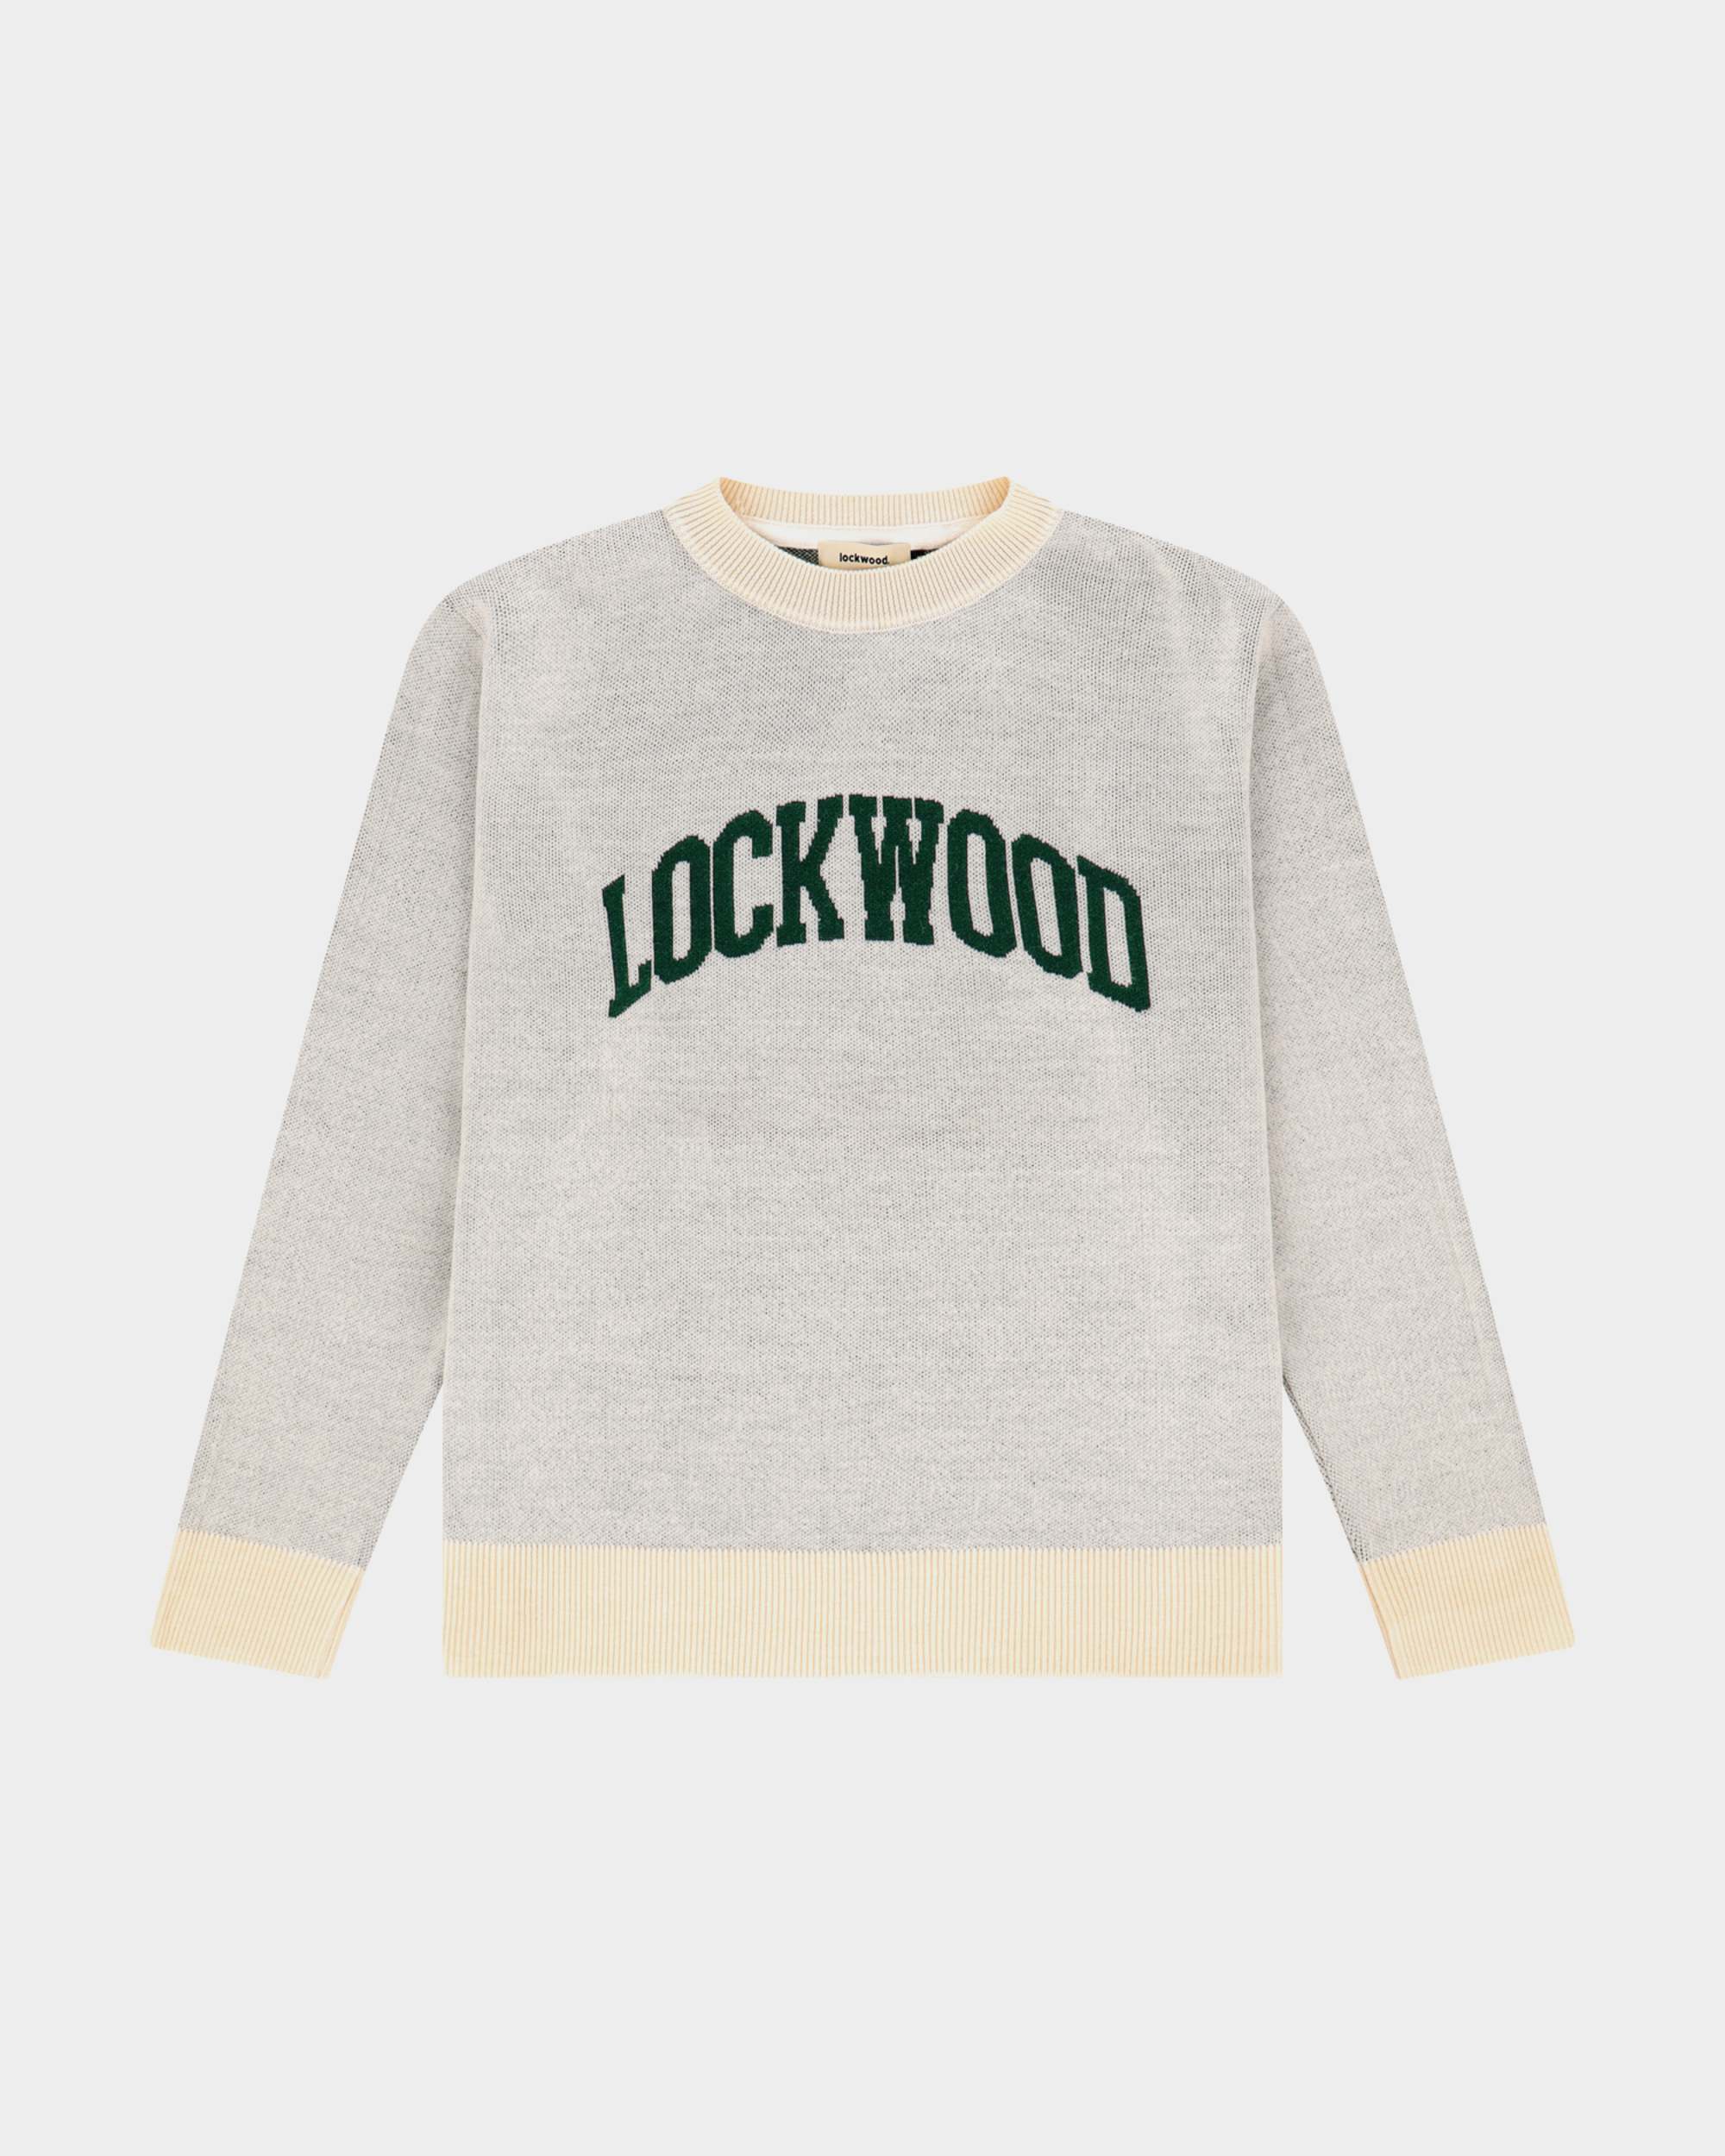 Lockwood Varsity Knit Creme/Green